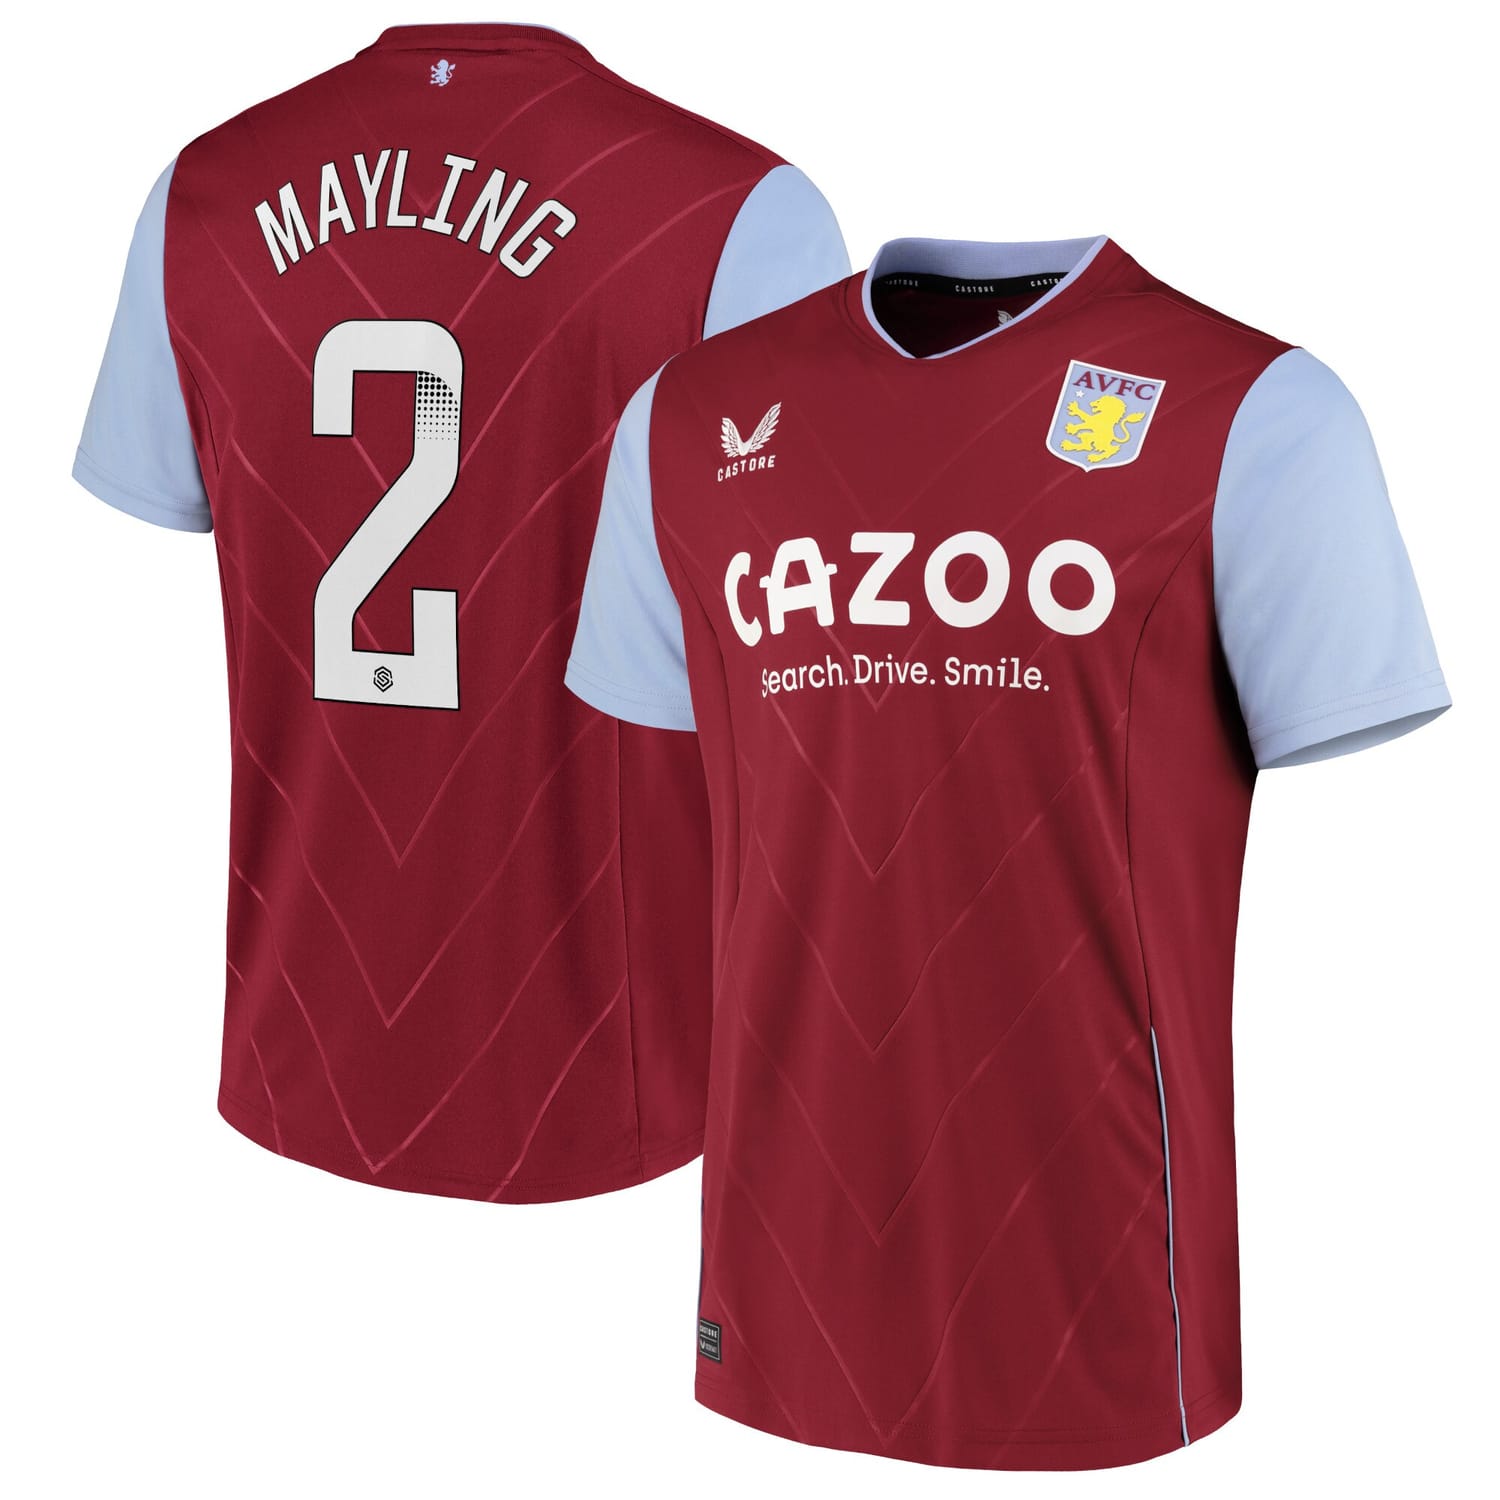 Premier League Aston Villa Home WSL Jersey Shirt 2022-23 player Sarah Mayling 2 printing for Men